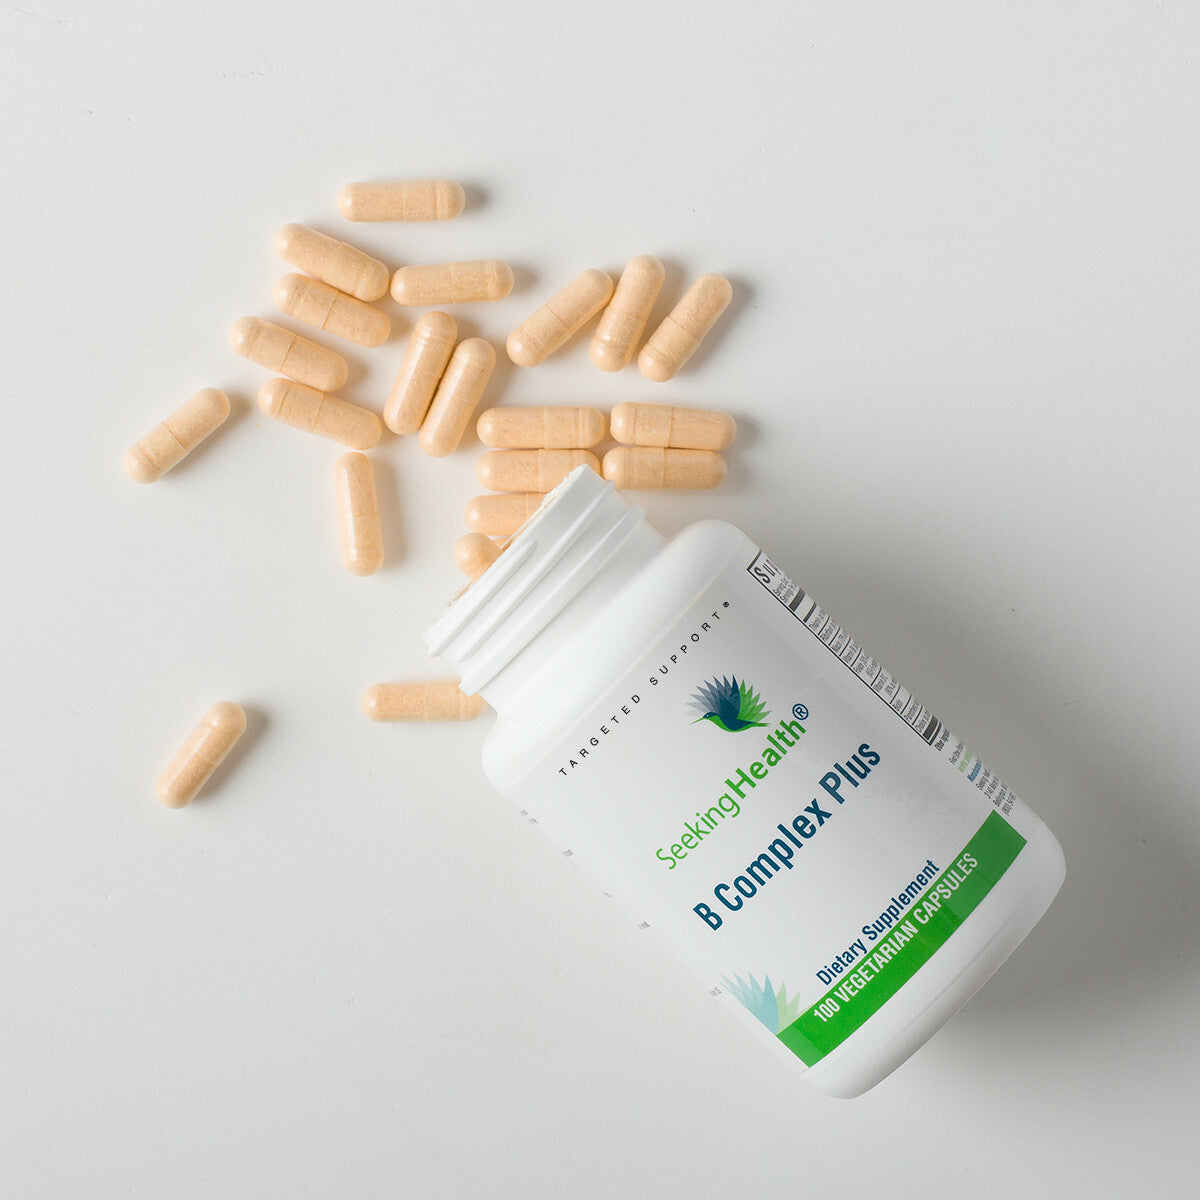 B Complex Plus 100 capsules Seeking Health - Premium Vitamins & Supplements from Seeking Health - Just $25! Shop now at Nutrigeek